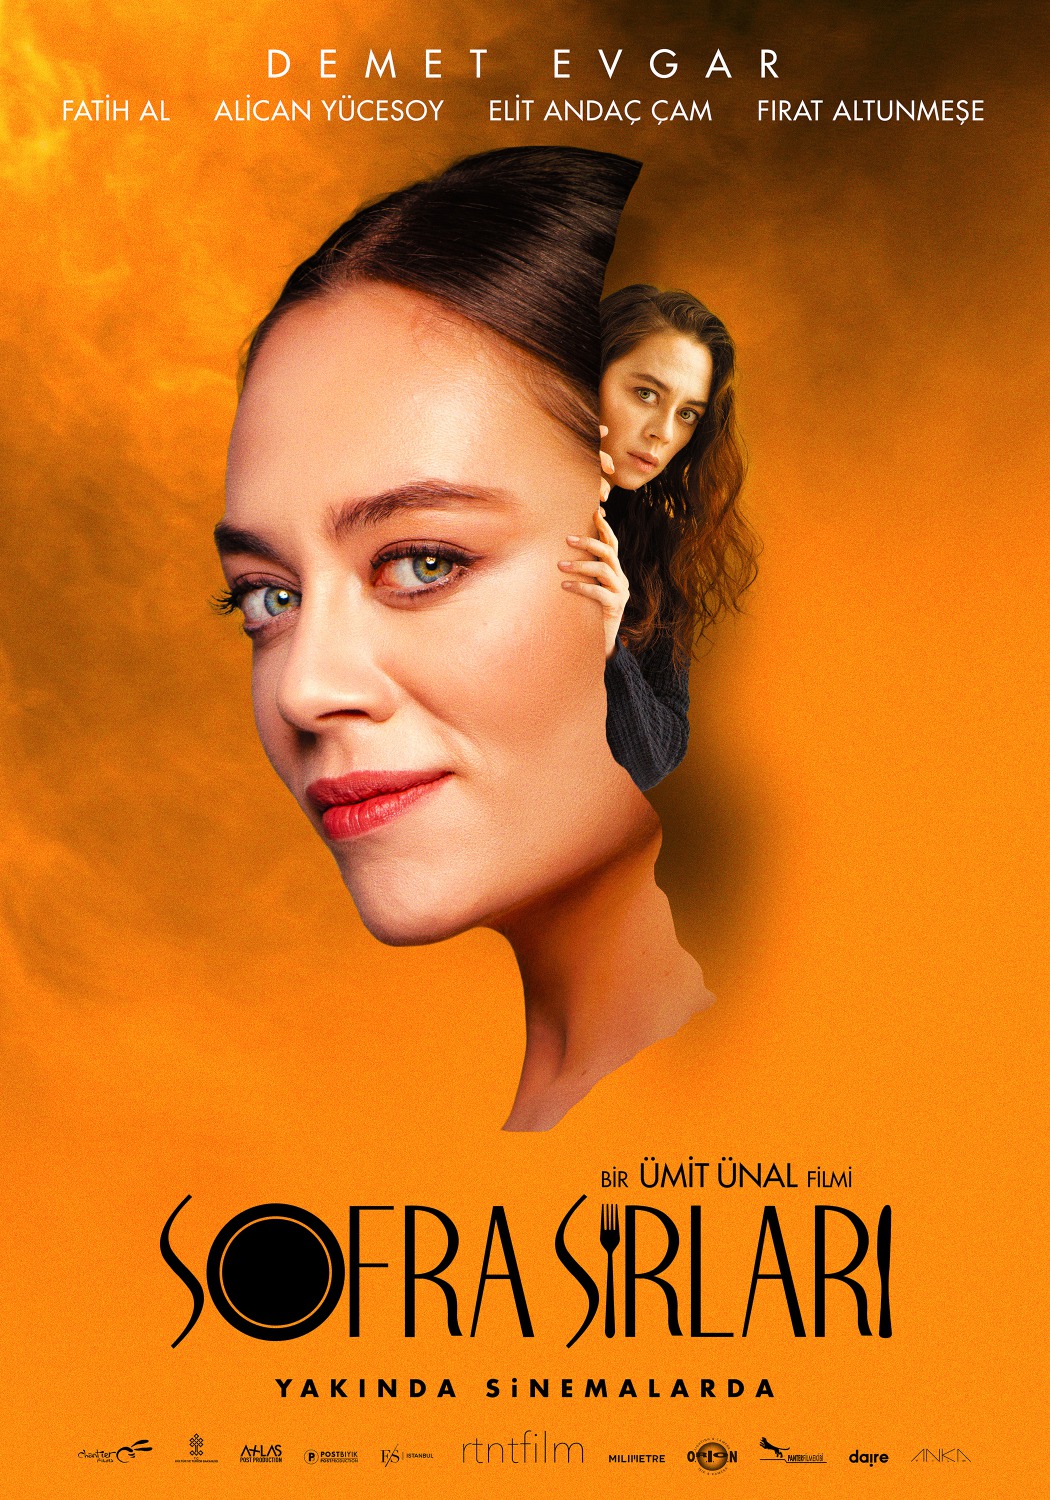 Extra Large Movie Poster Image for Sofra sirlari 